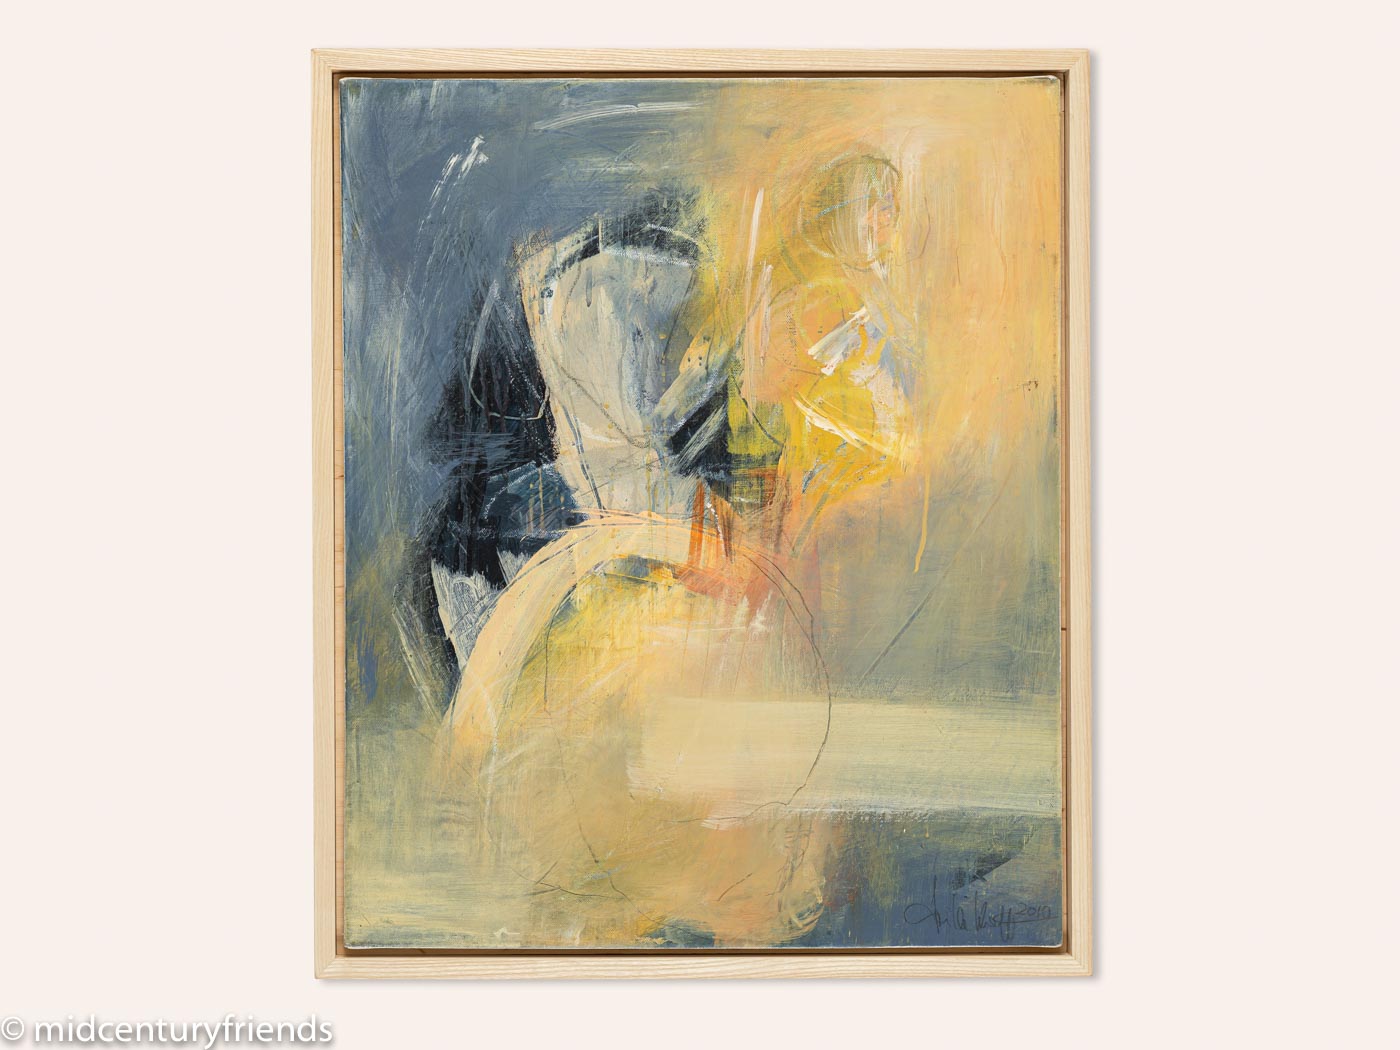 Abstrakte Komposition, Öl auf Leinwand, 54 x 64 cm